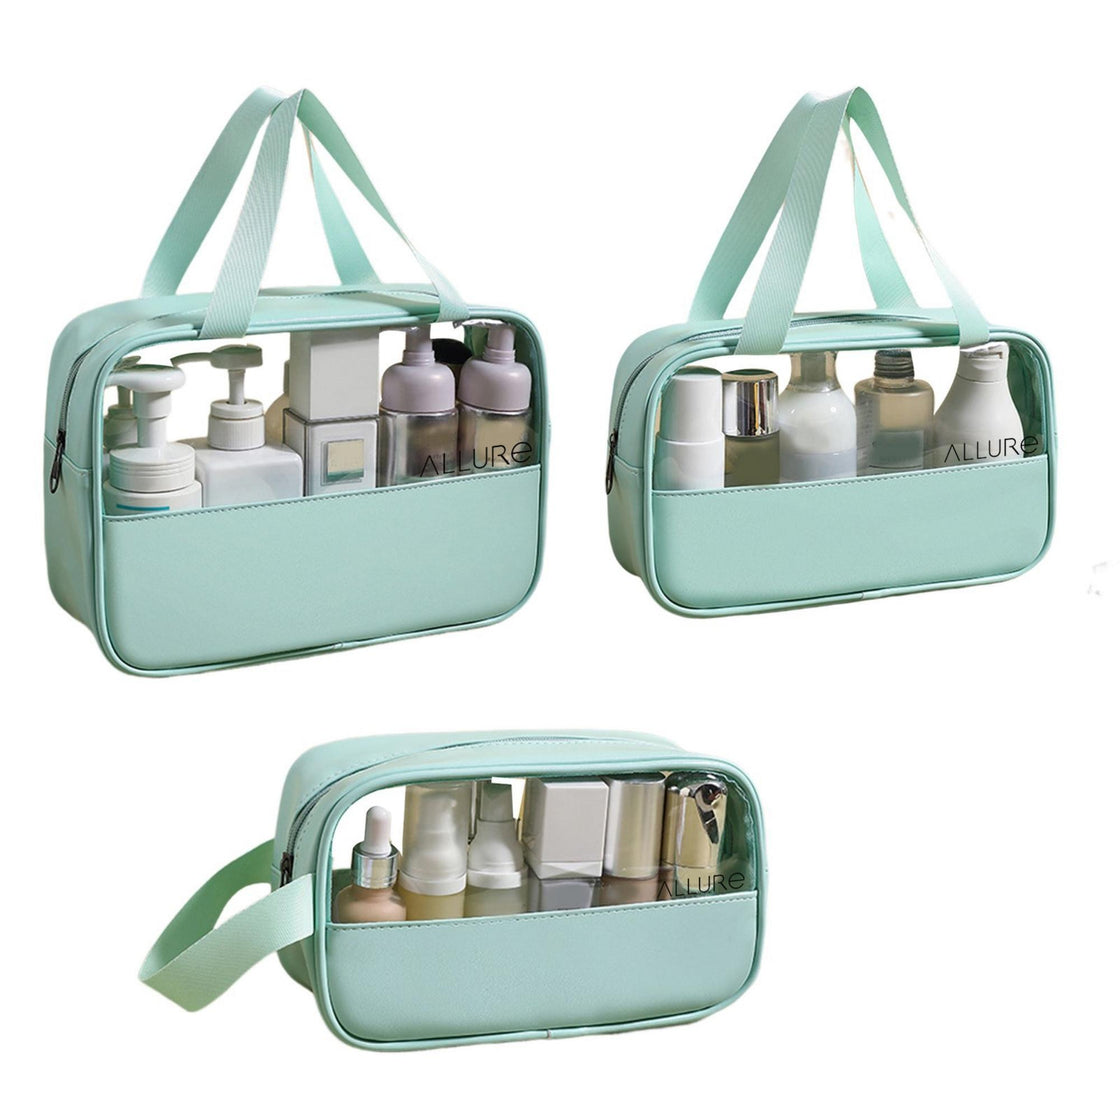 Waterproof Toiletry Bag|travel wash bag,Matein bag